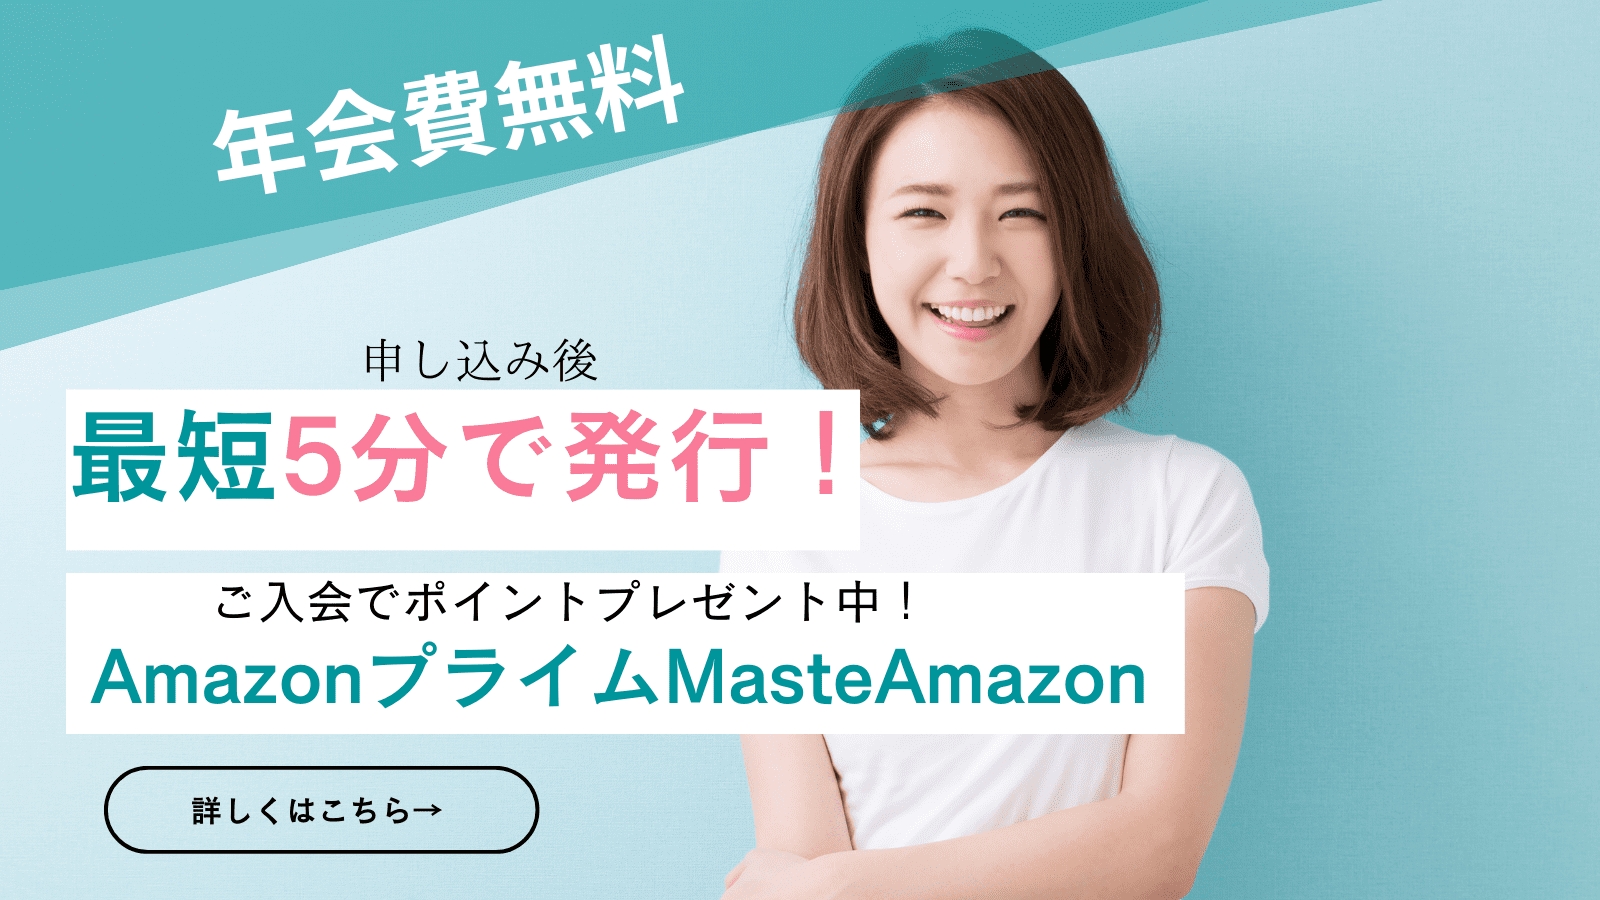 Amazon Mastercard特典